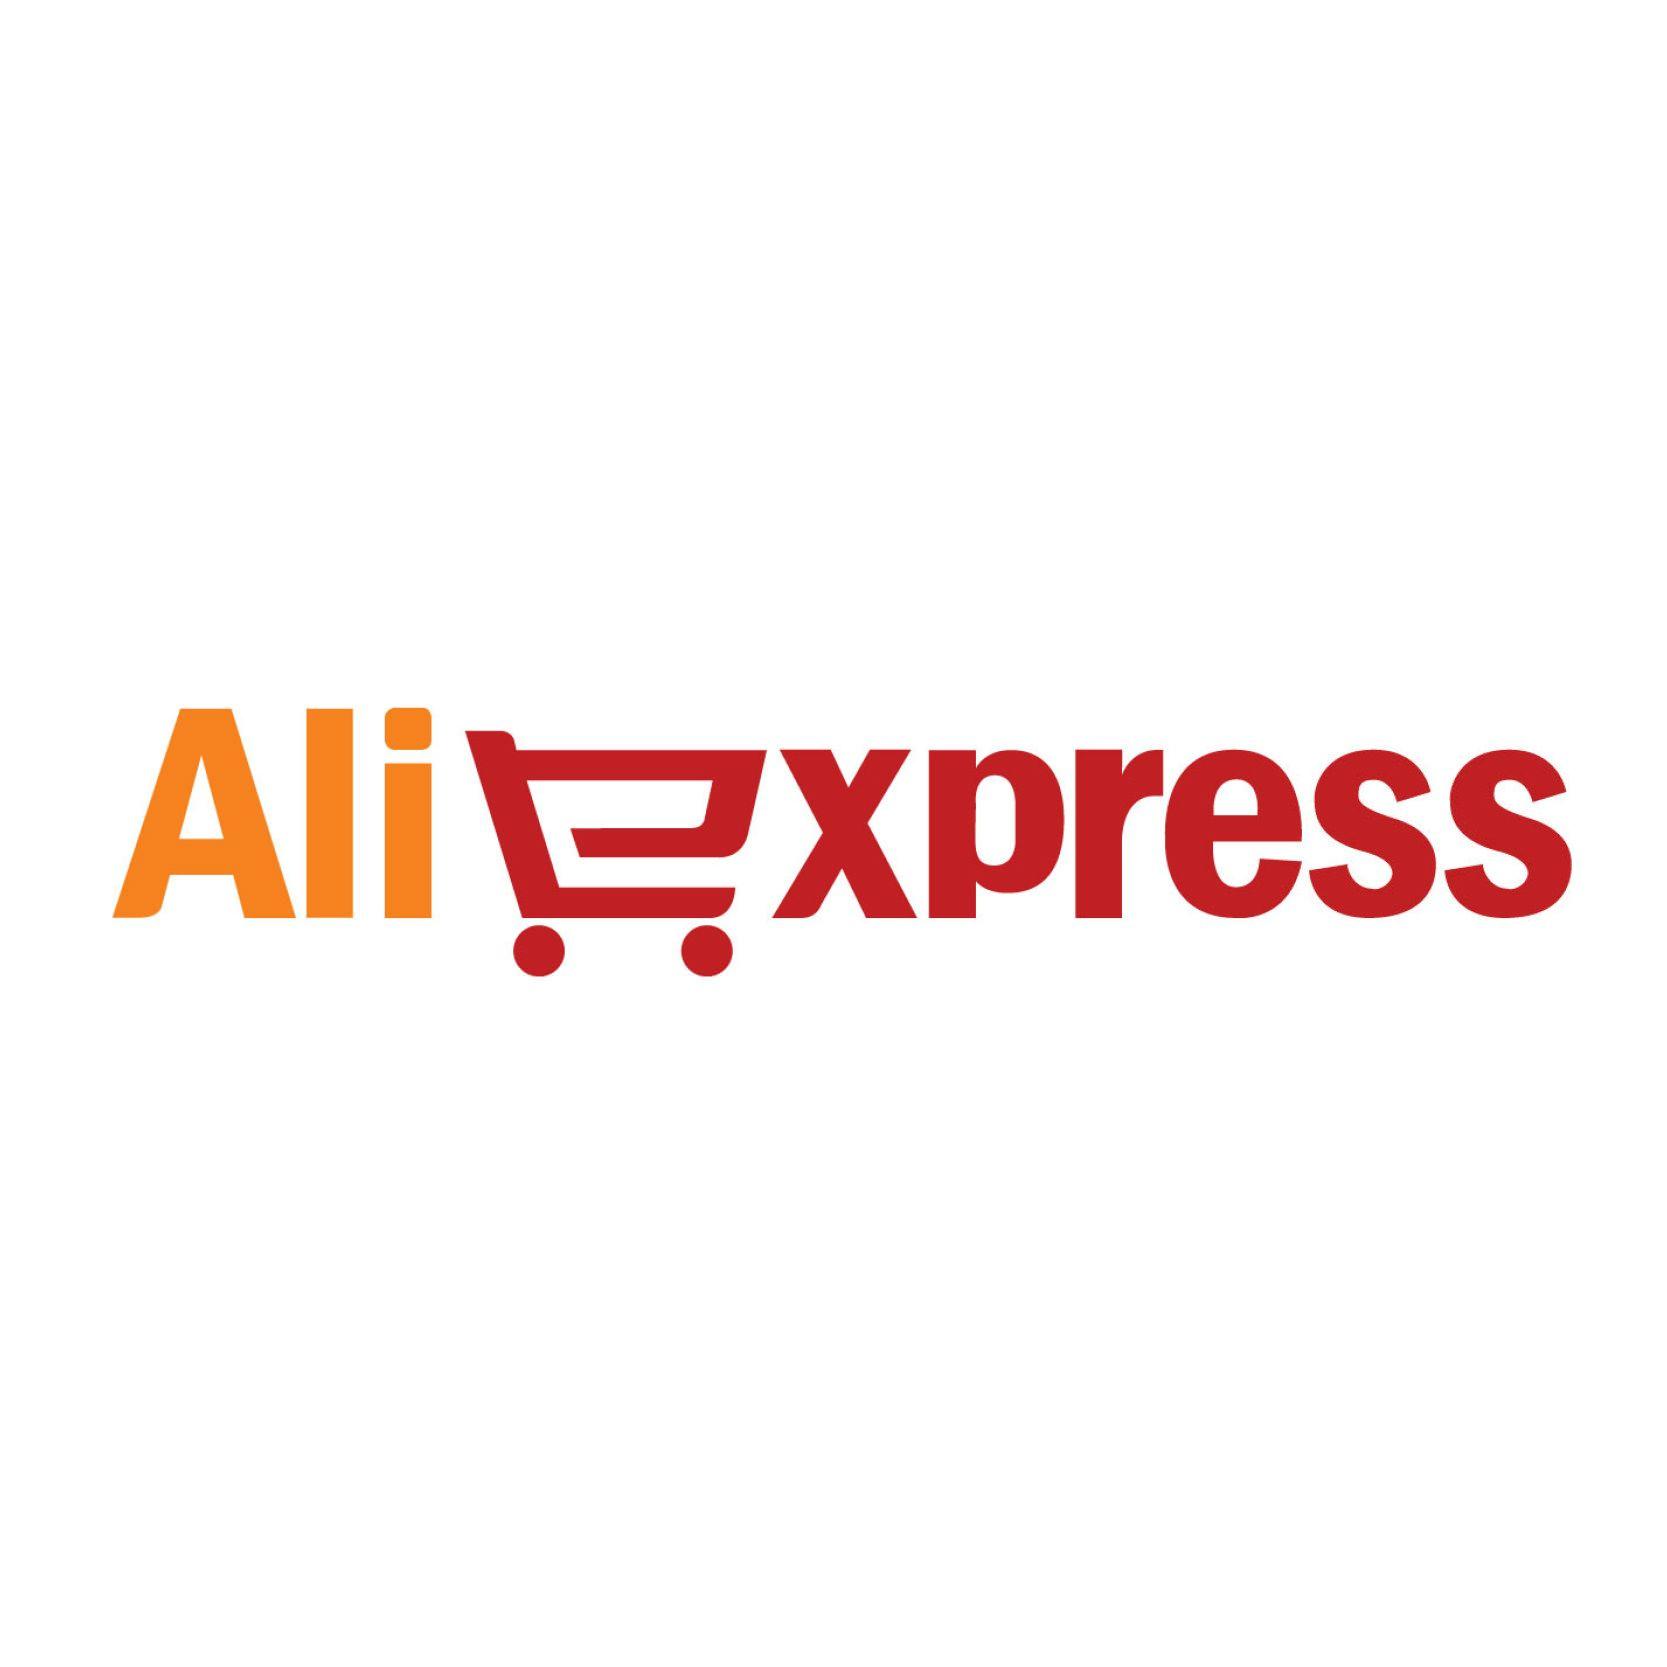 Aliexpress Logo - Aliexpress Logos